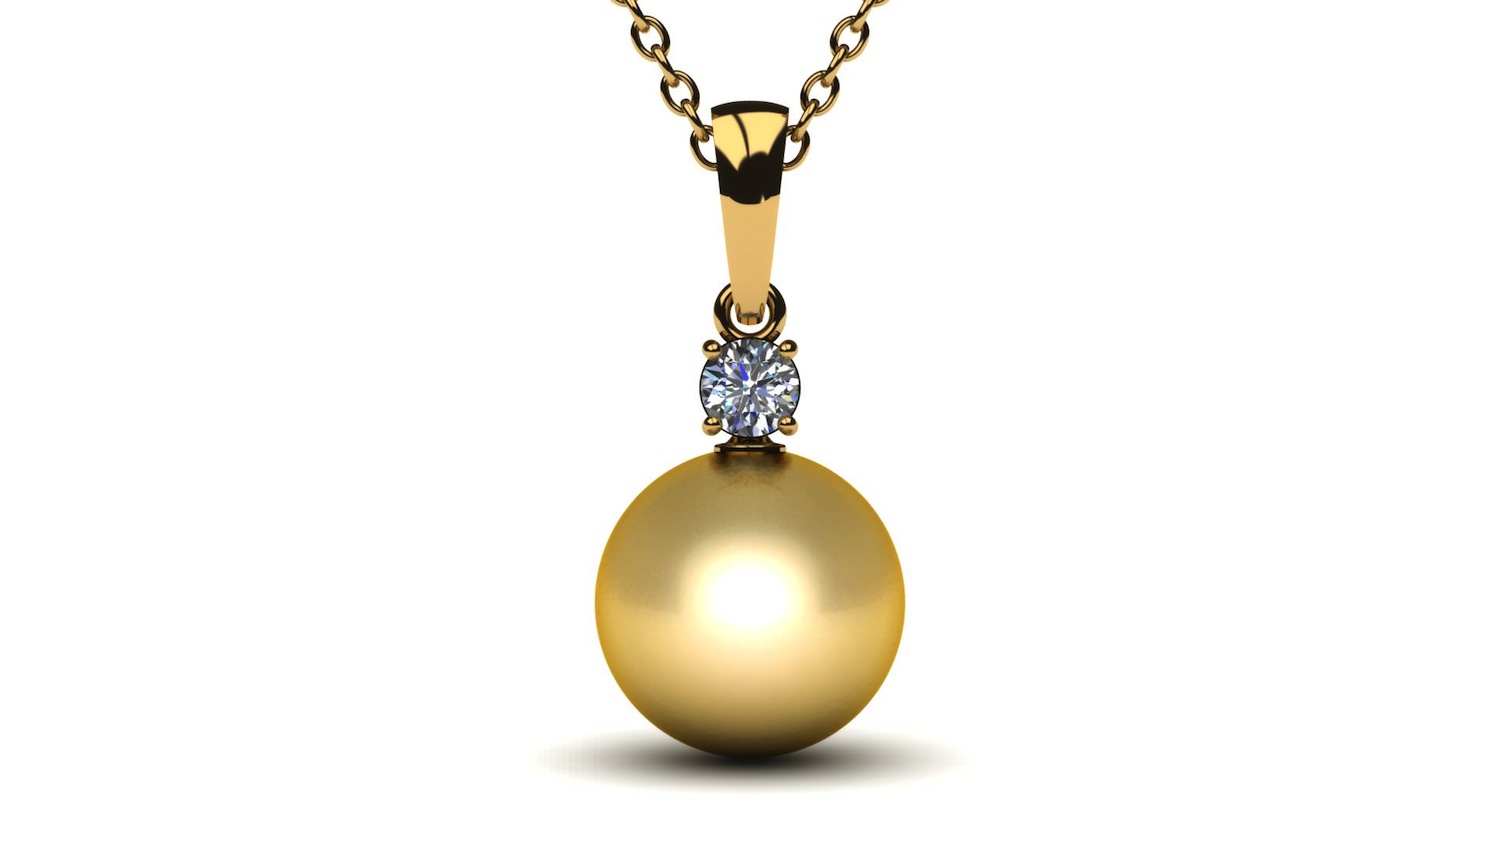 10mm golden south sea pearl pendant with .25 carat diamond (g, vs) ihpeuik